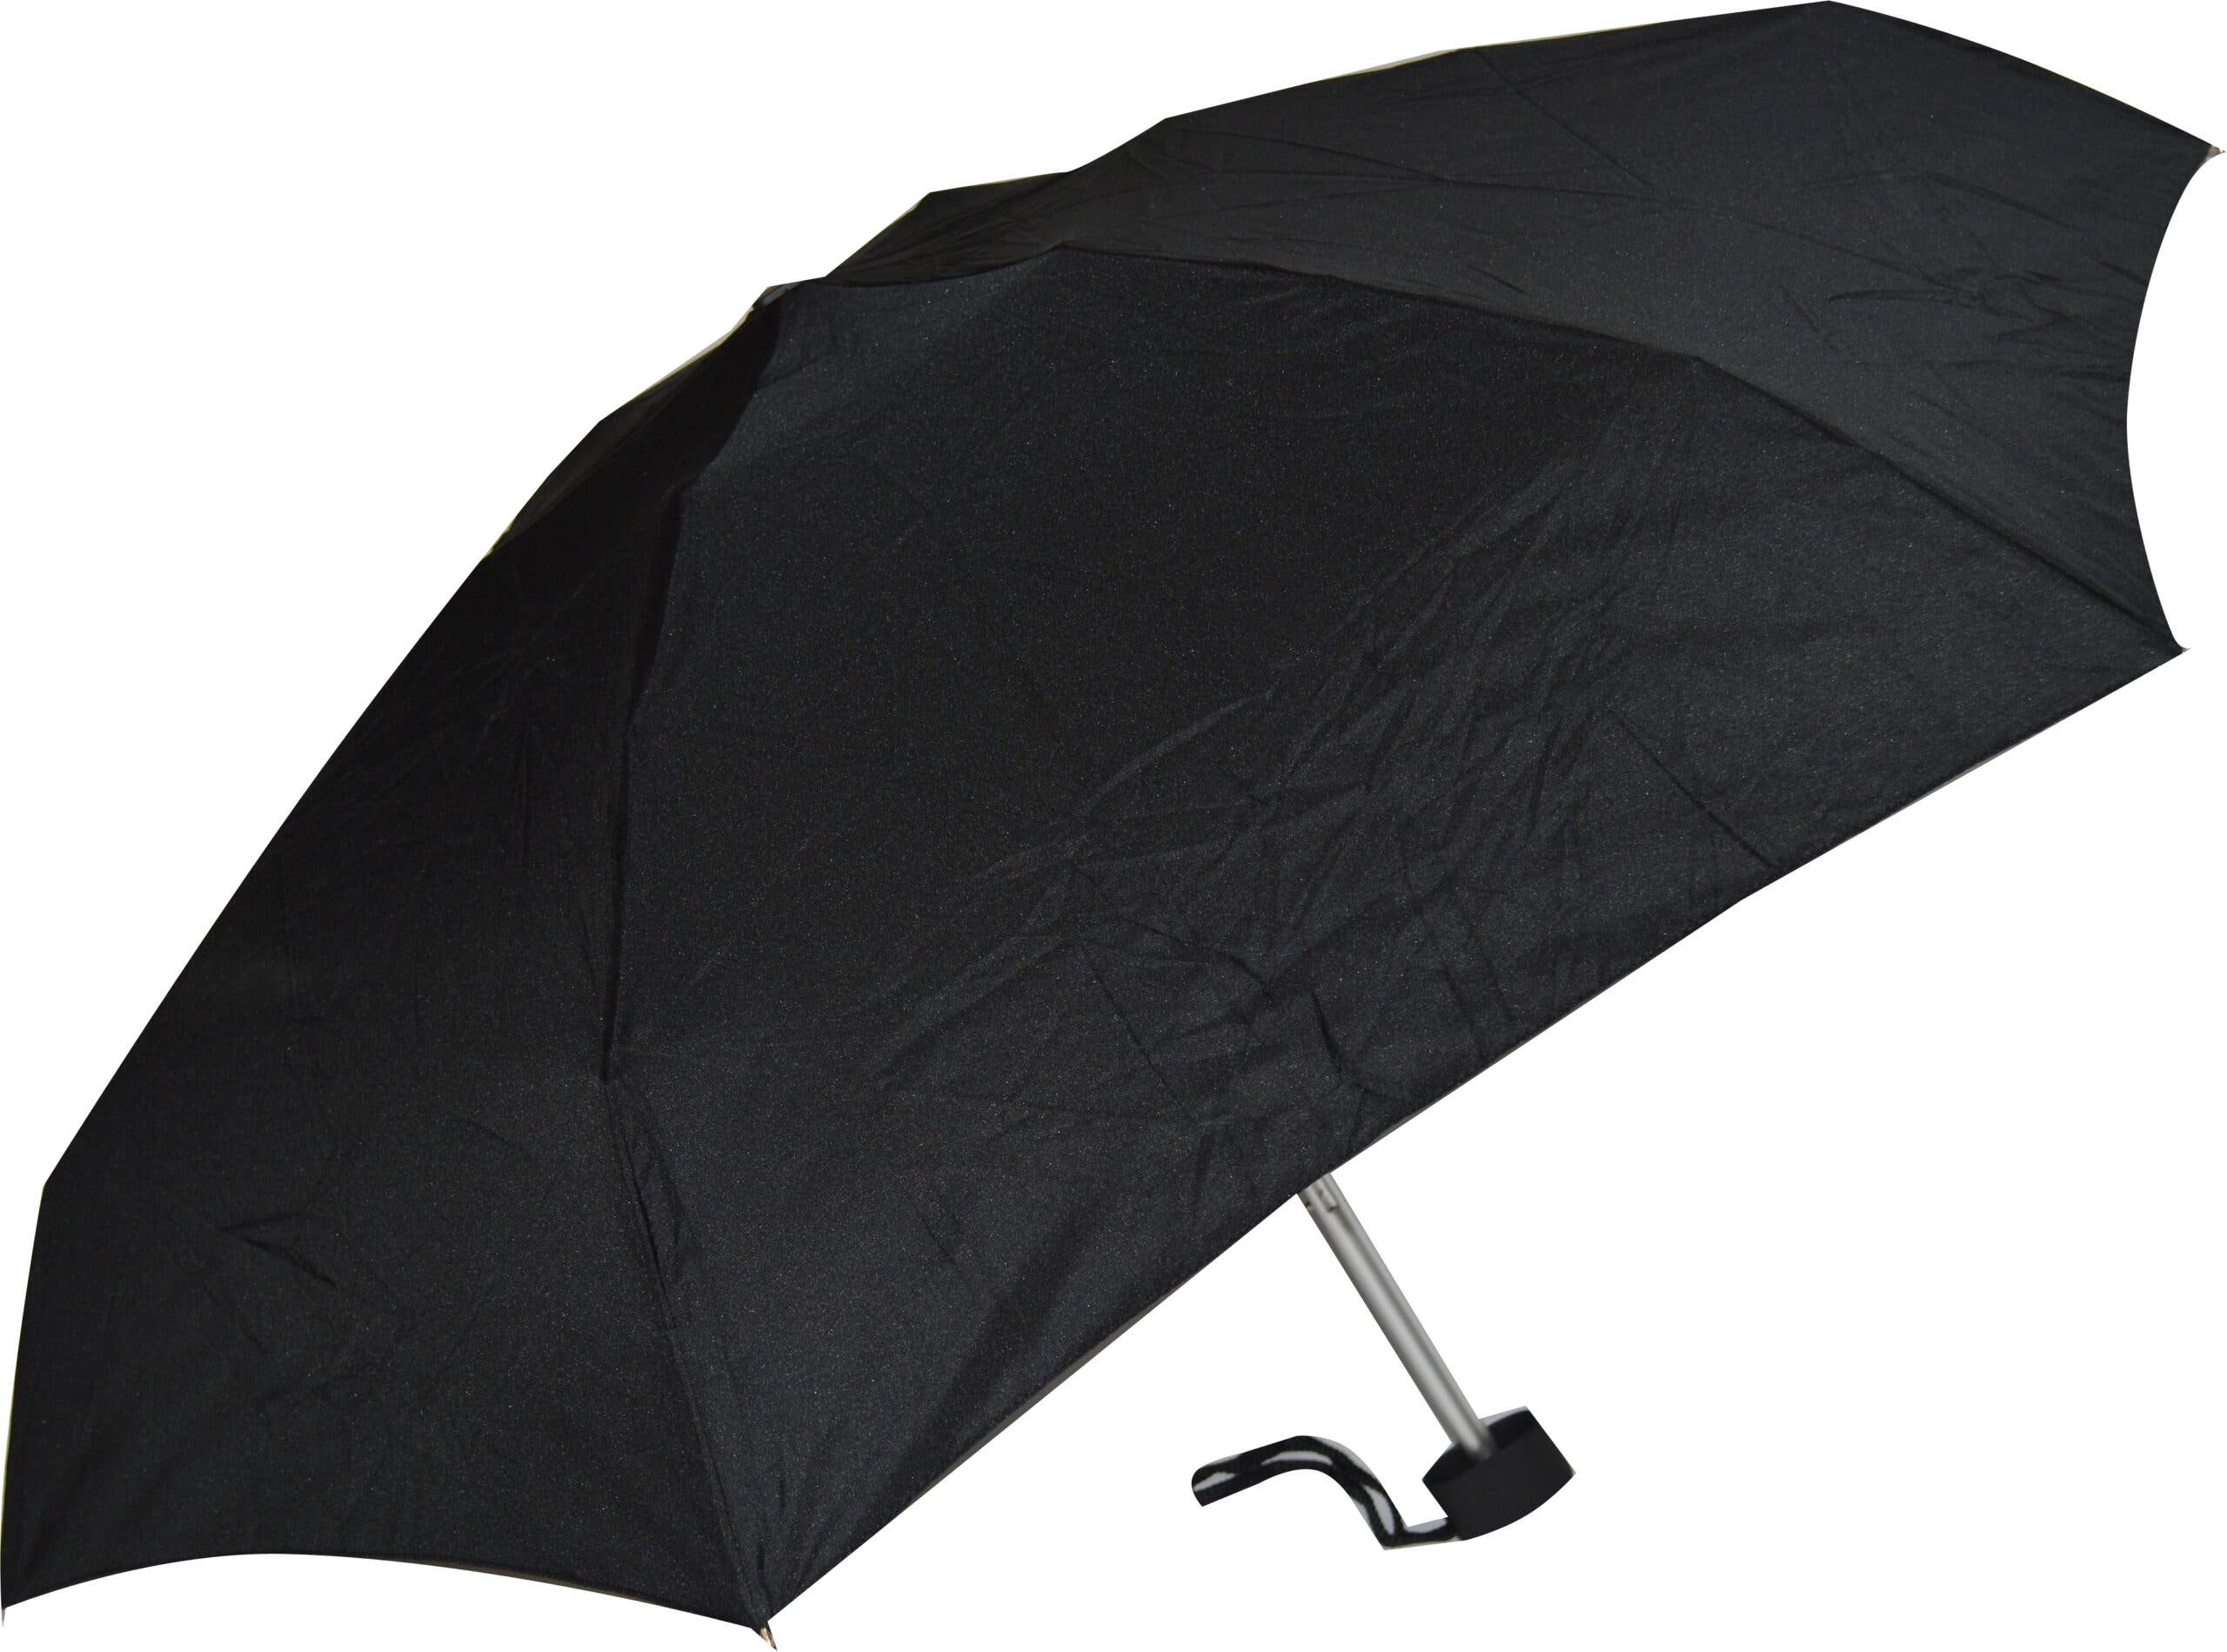 Everyday Folding Super Mini Black Umbrella